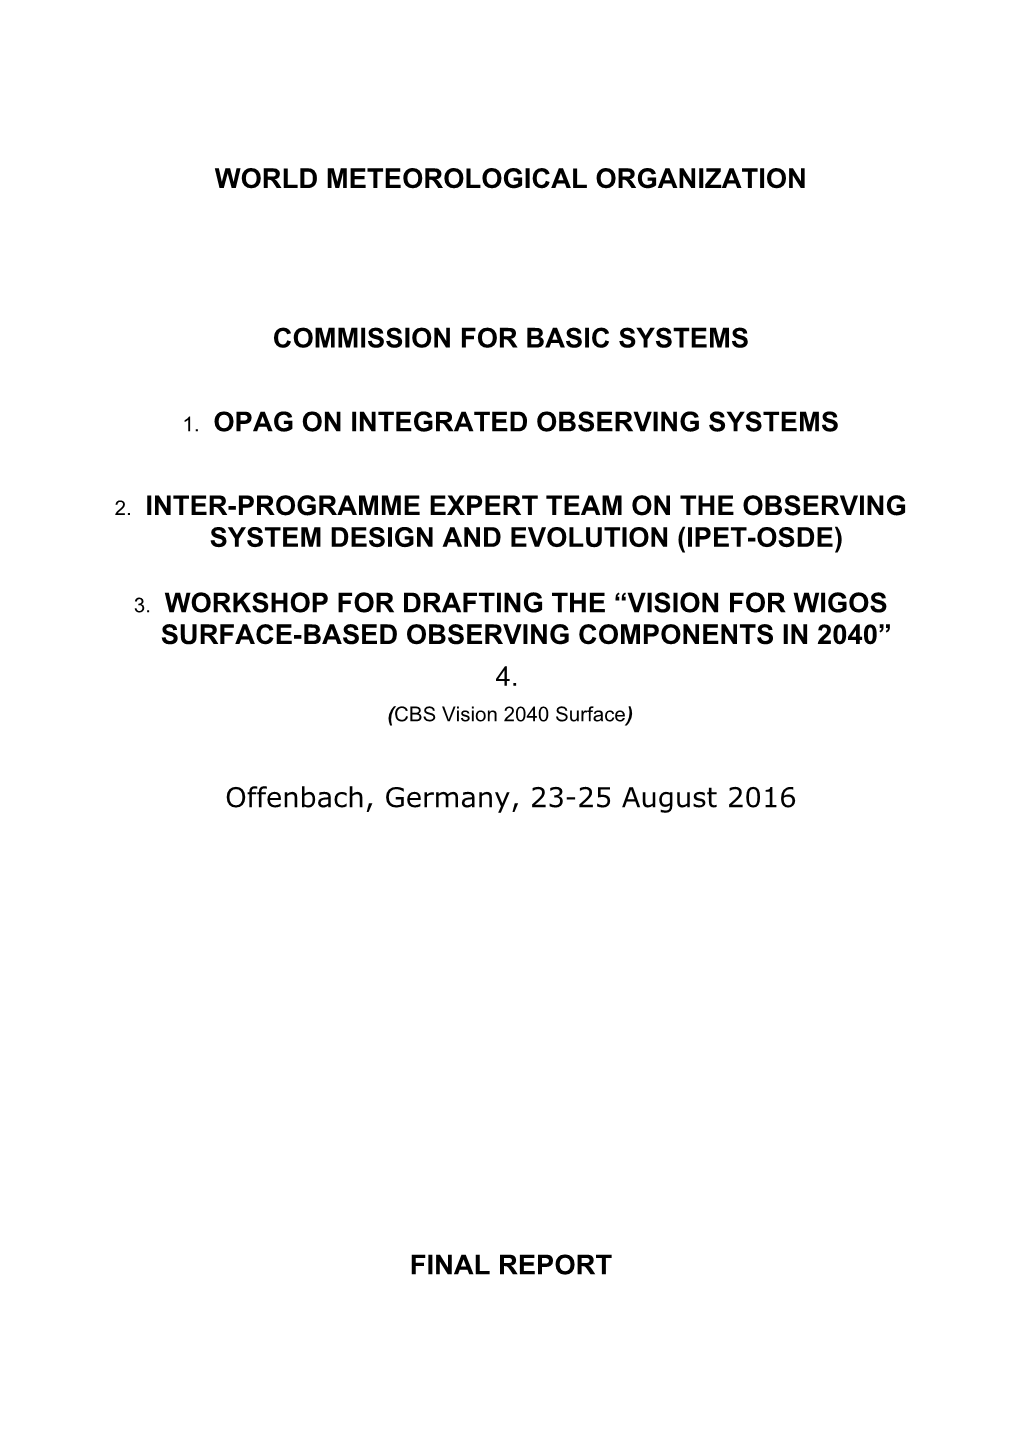 IPET-OSDE2, Final Report